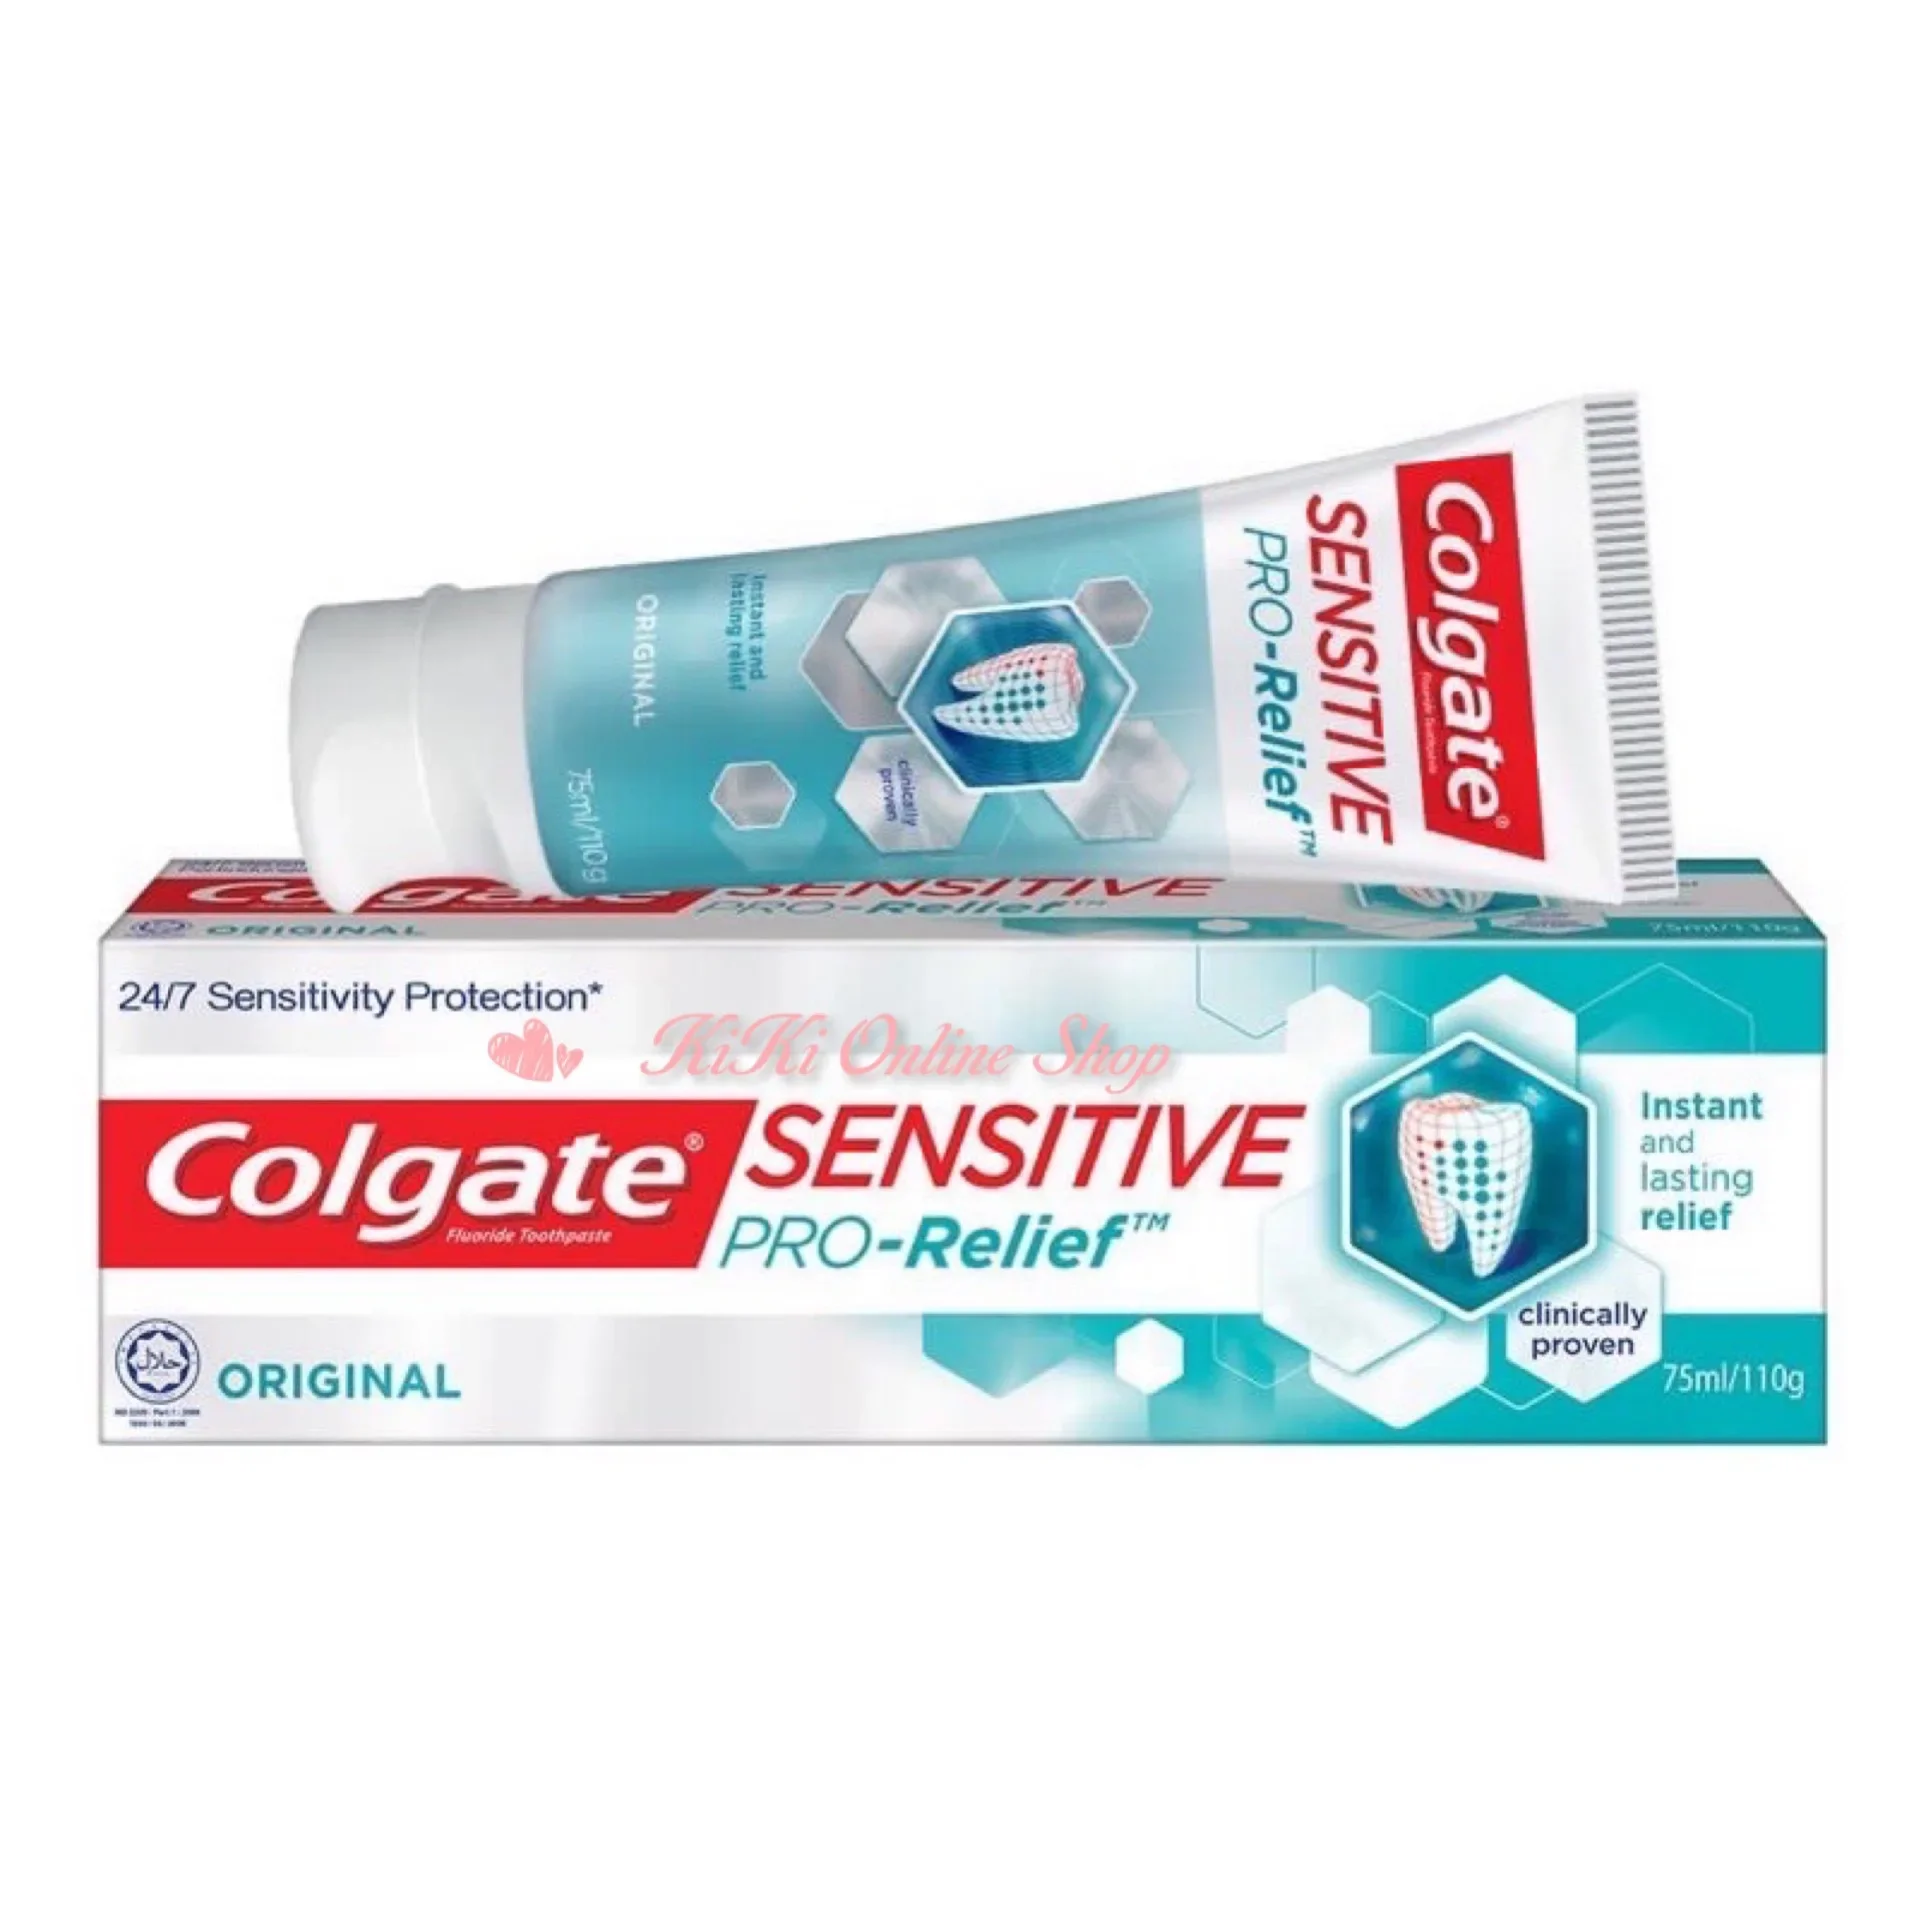 Colgate Sensitive Pro Relief Complete Protection Toothpaste 110g ORIGINAL